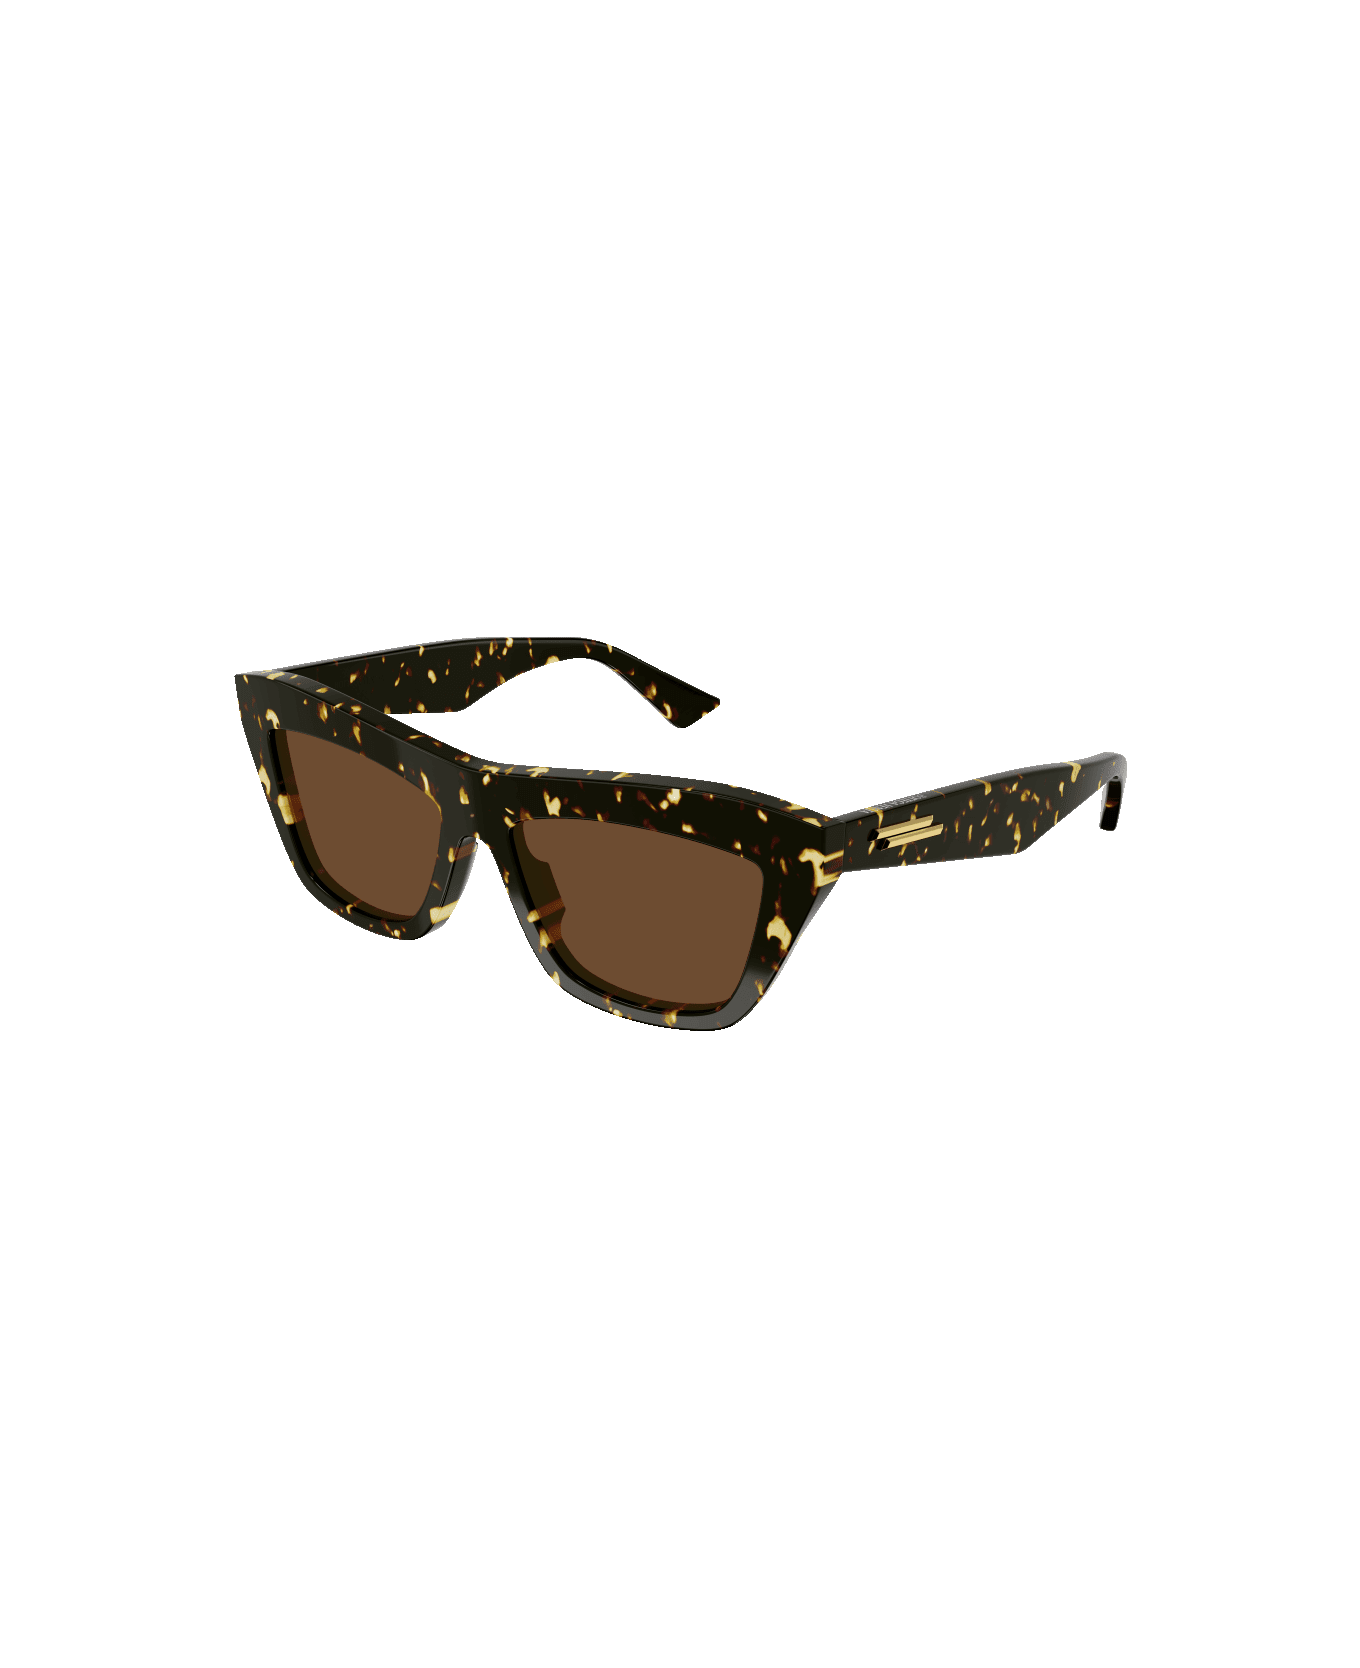 Bottega Veneta Eyewear BV1121S 002 Sunglasses - Tortoise